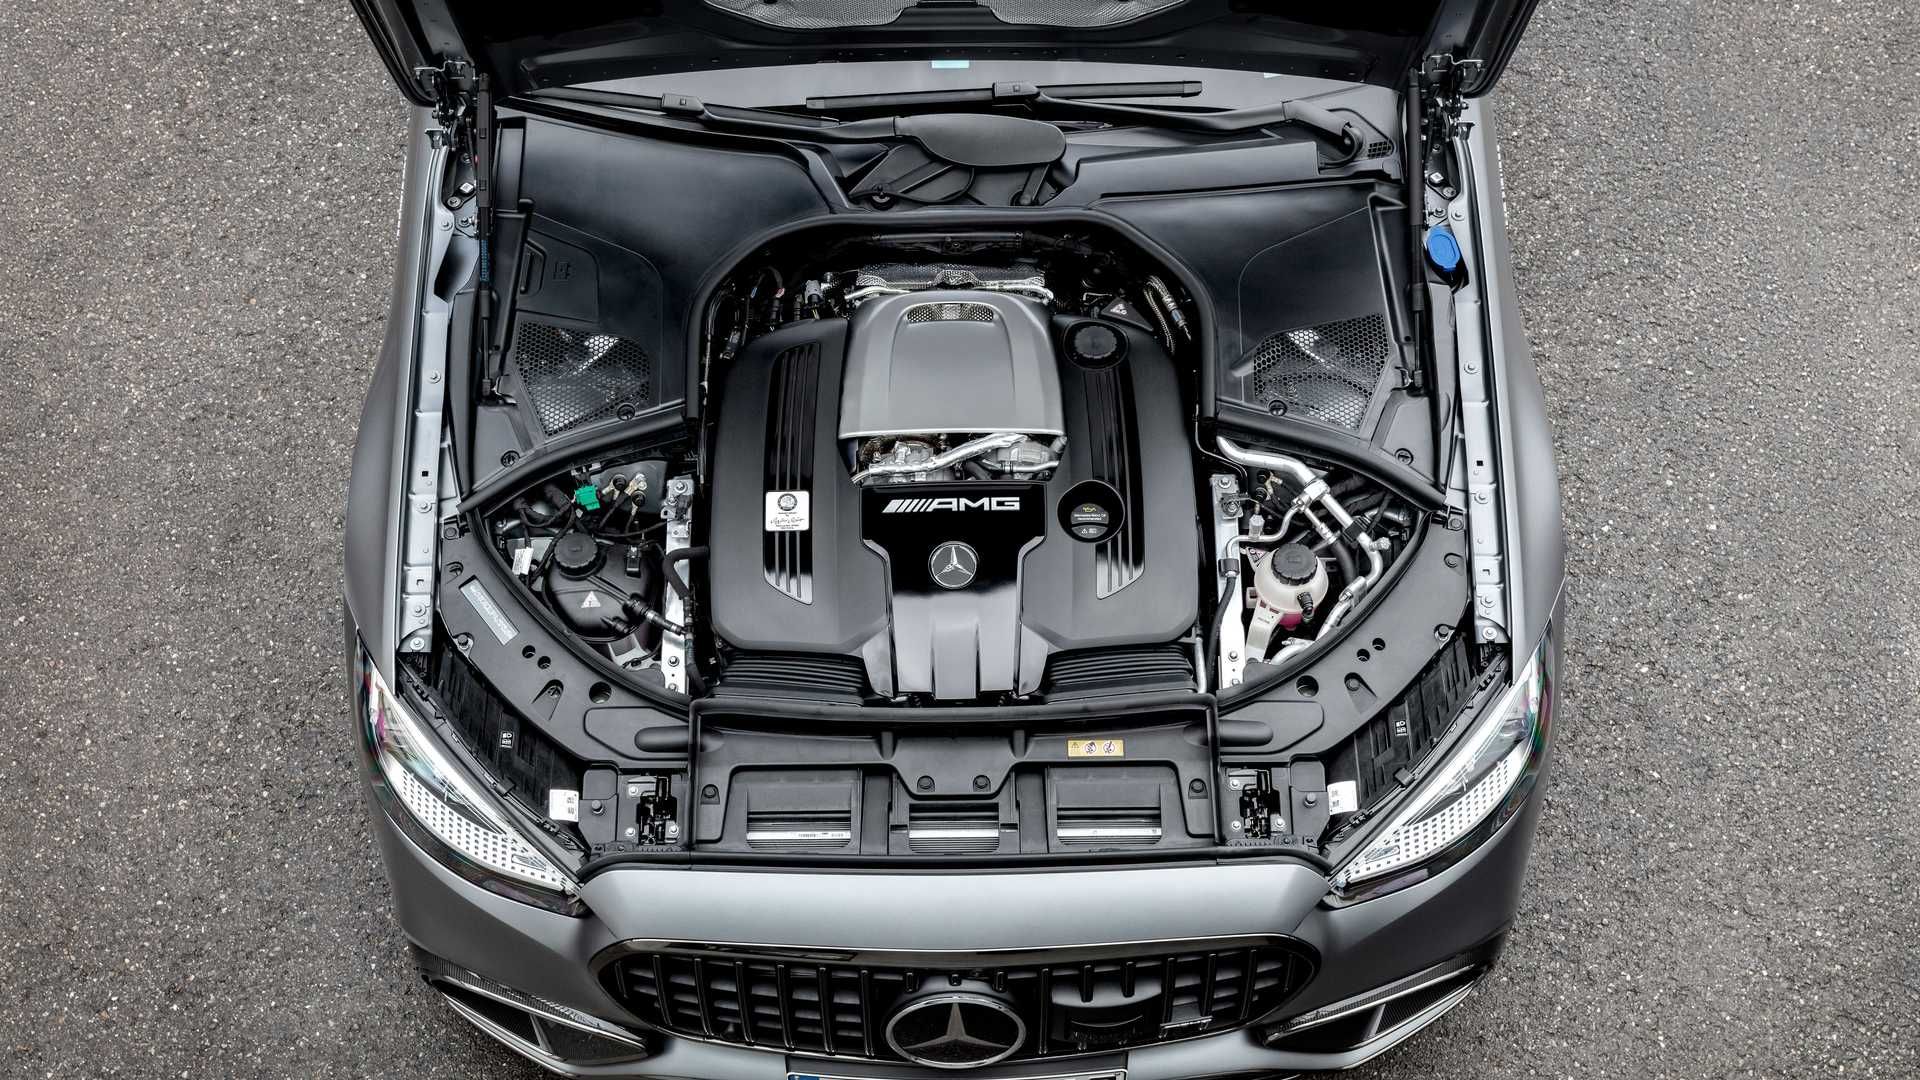  2023 Mercedes-AMG S63 Hybrid engine bay view